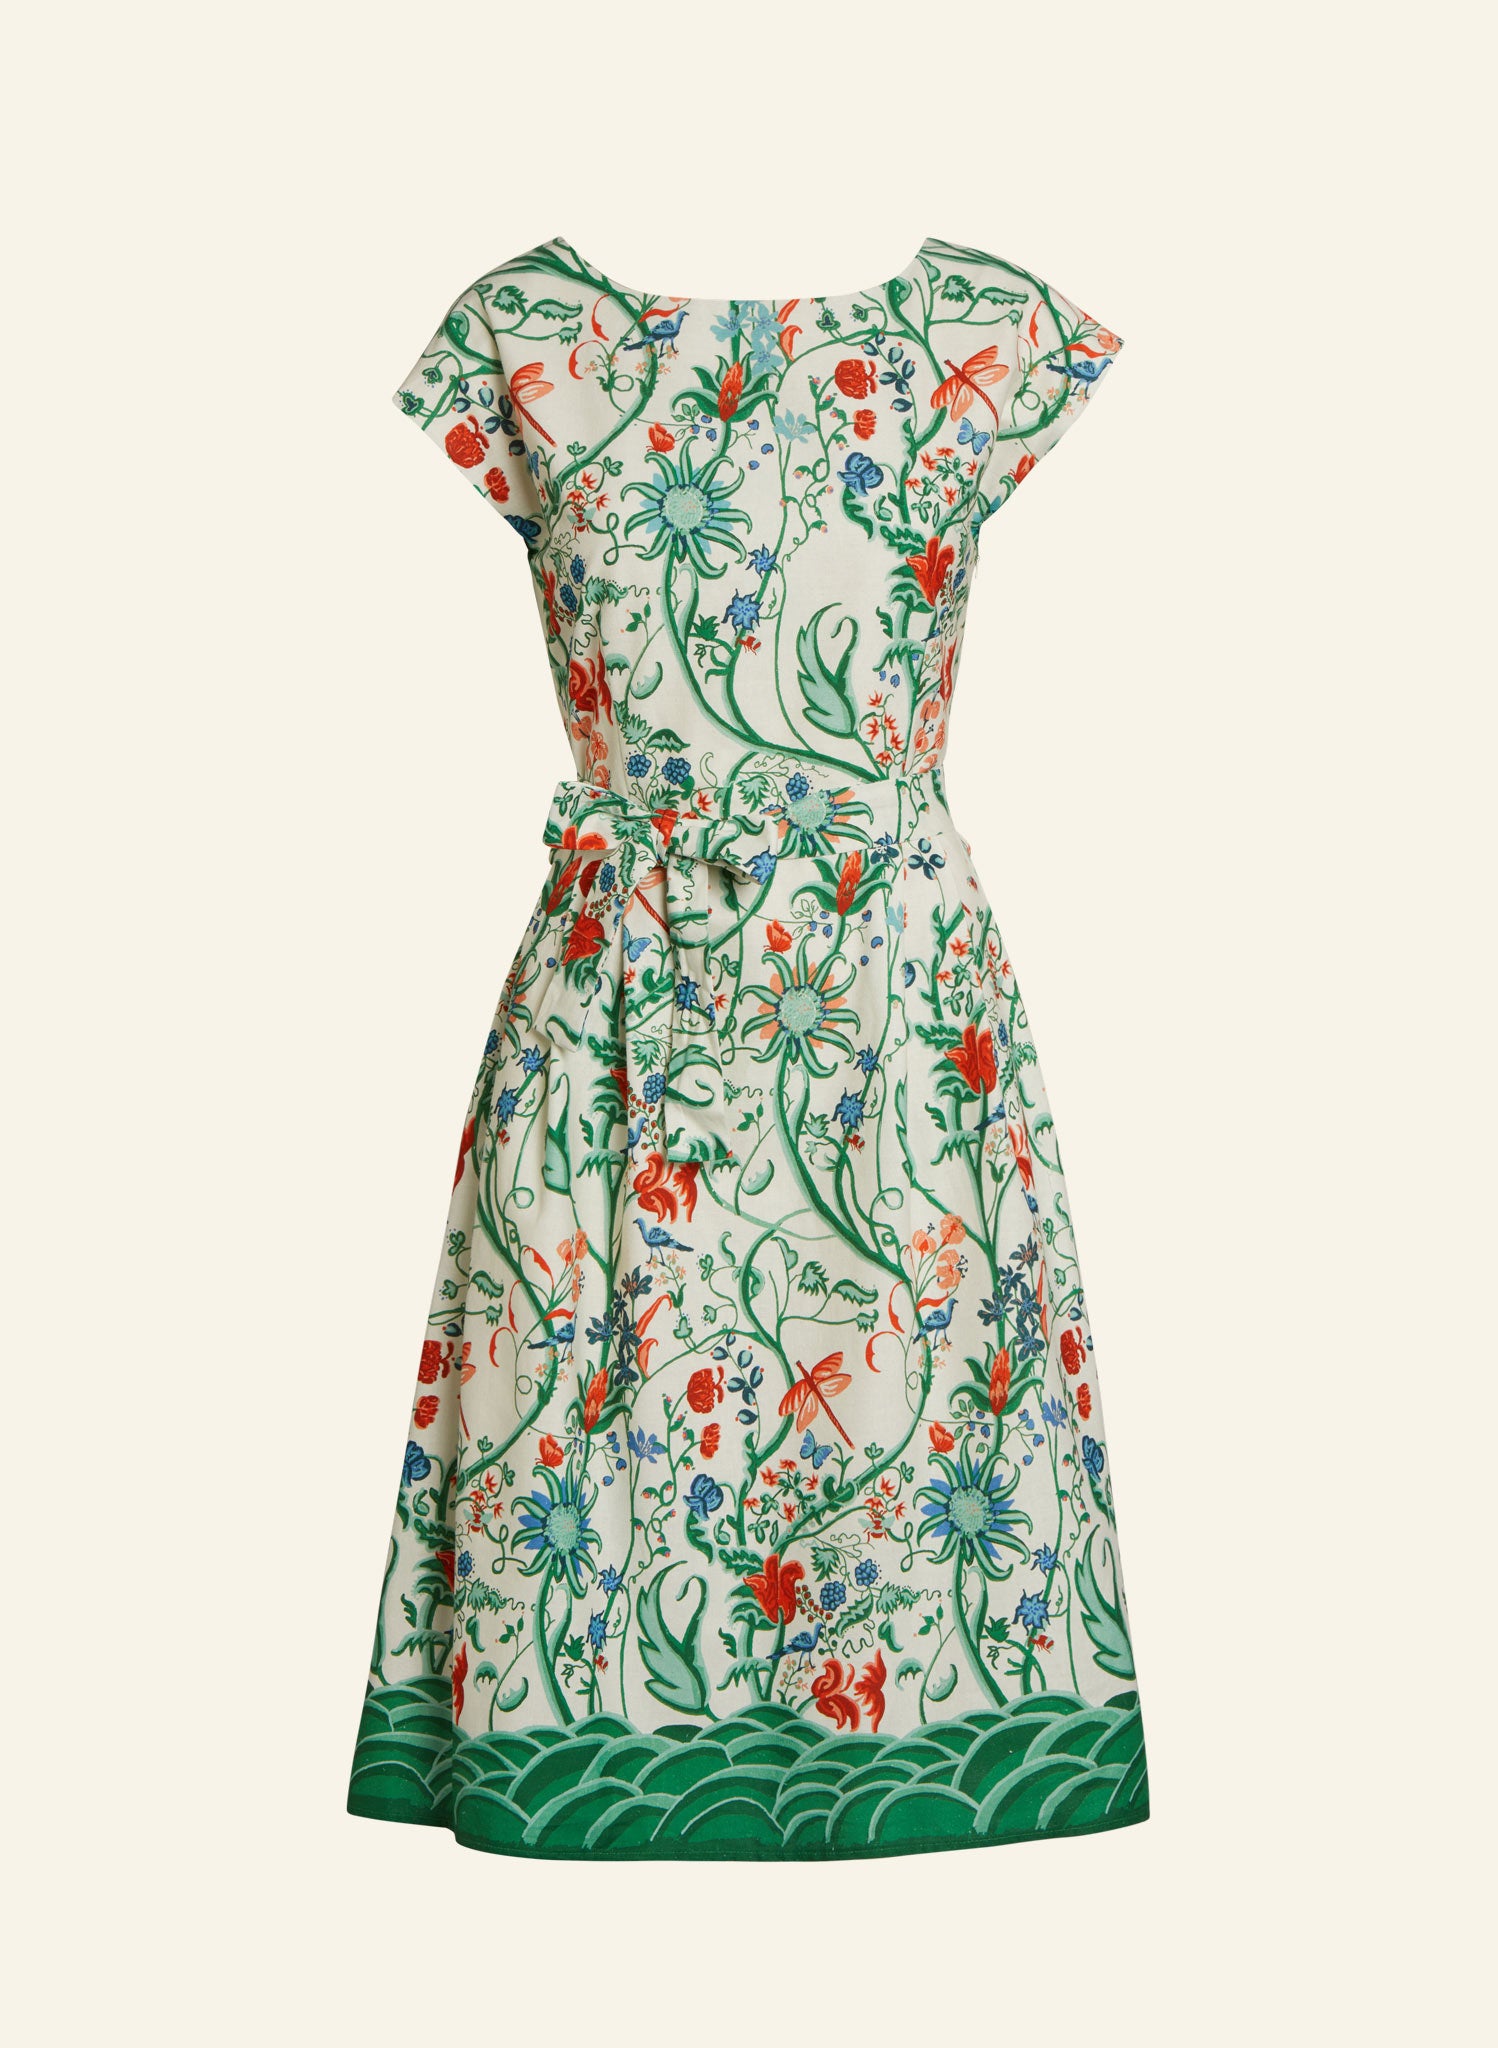 Beatrice Cap - Ivory Tapestry Dress